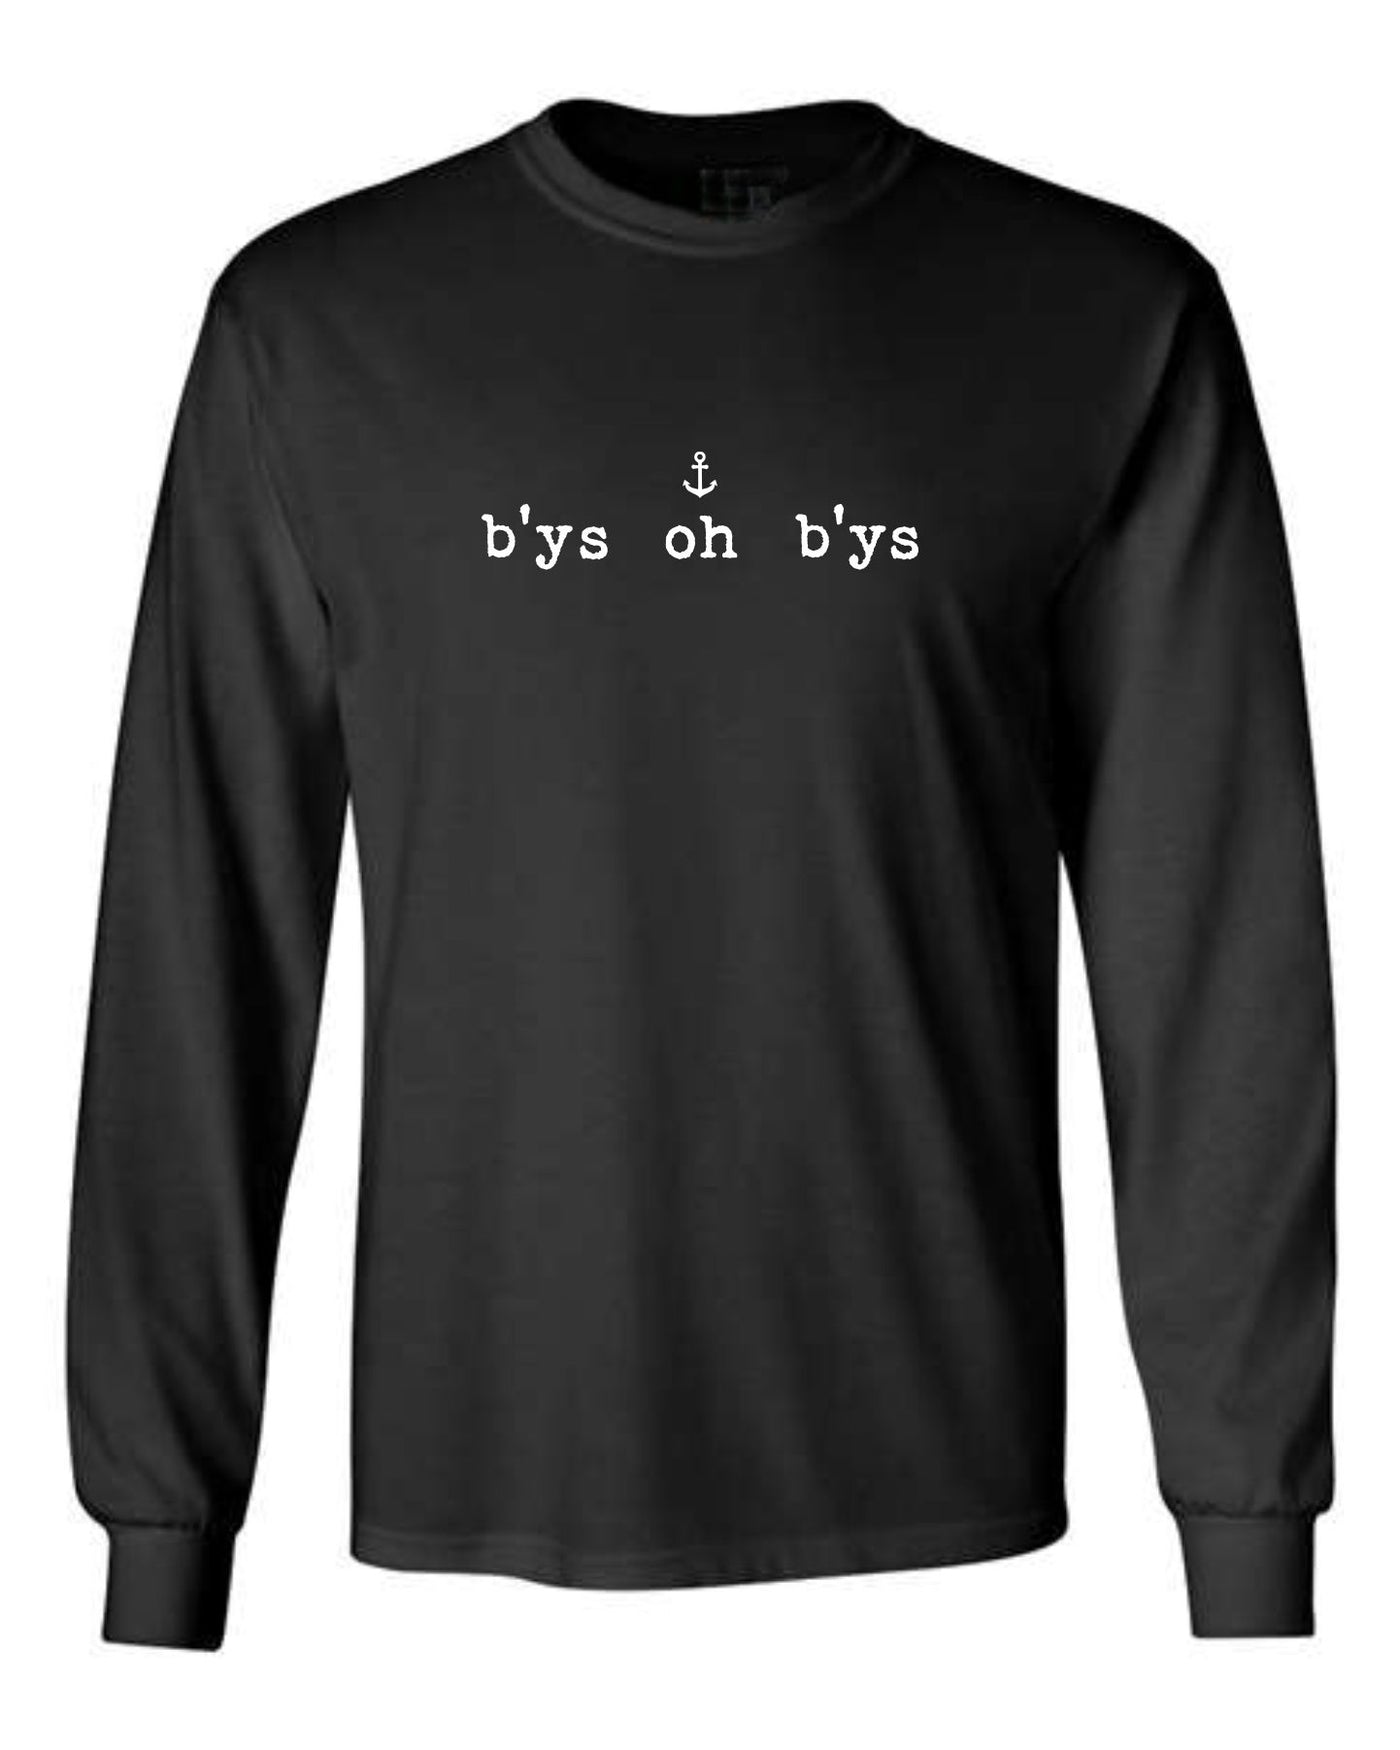 "B'ys Oh B'ys" Unisex Long Sleeve Shirt